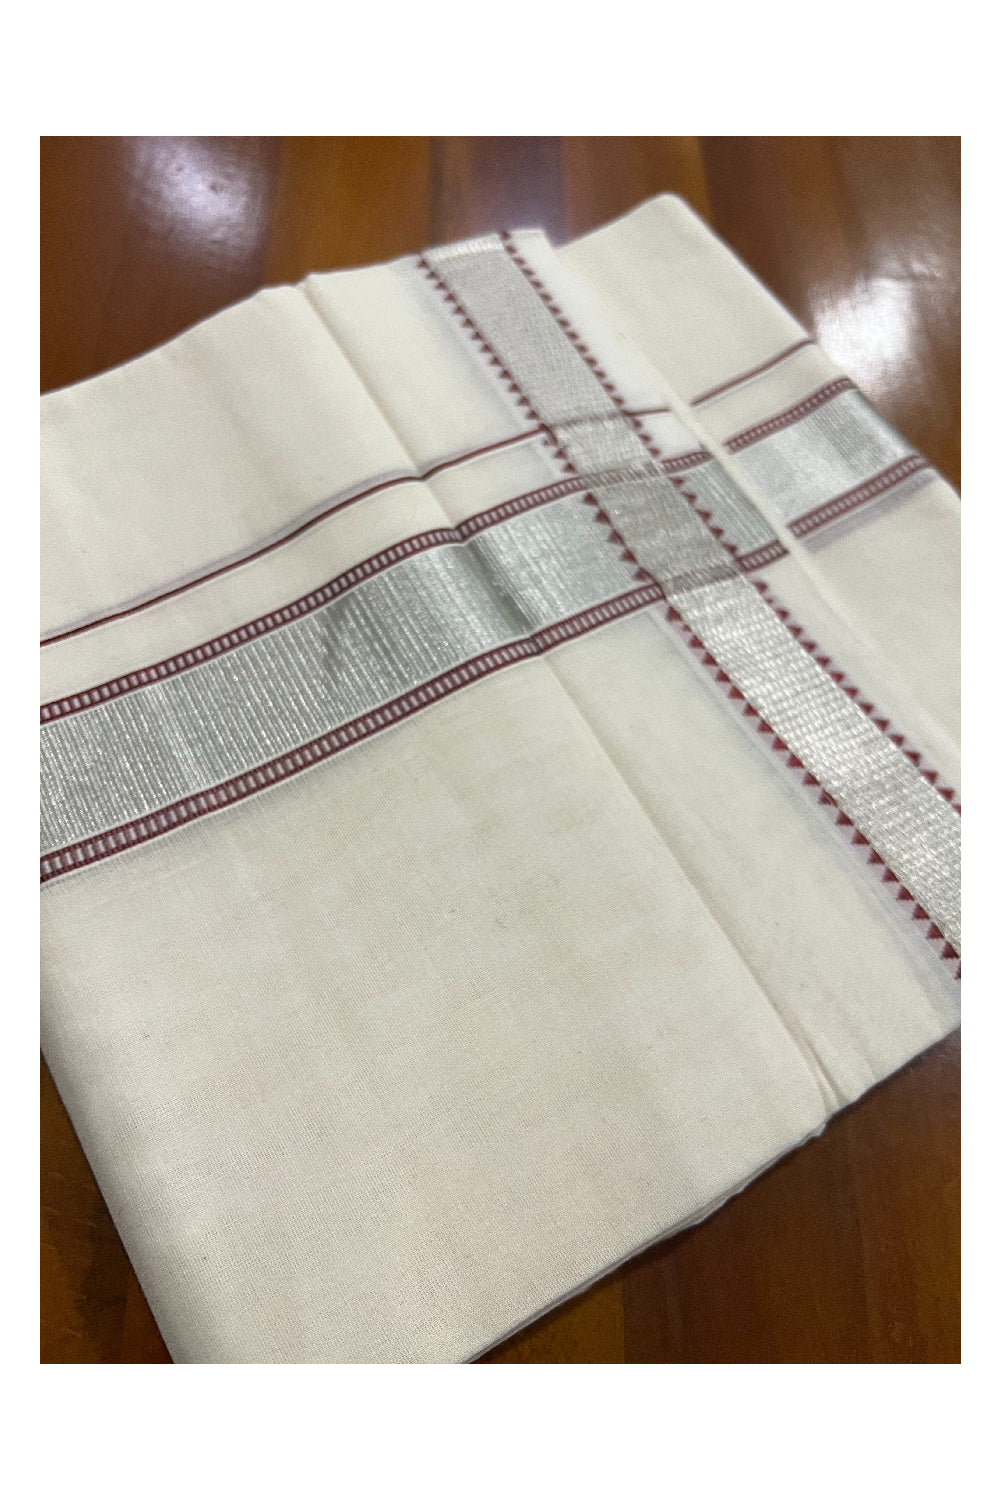 Southloom Kuthampully Handloom Pure Cotton Mundu with Silver and Purple Kasavu Designer Border (South Indian Dhoti)